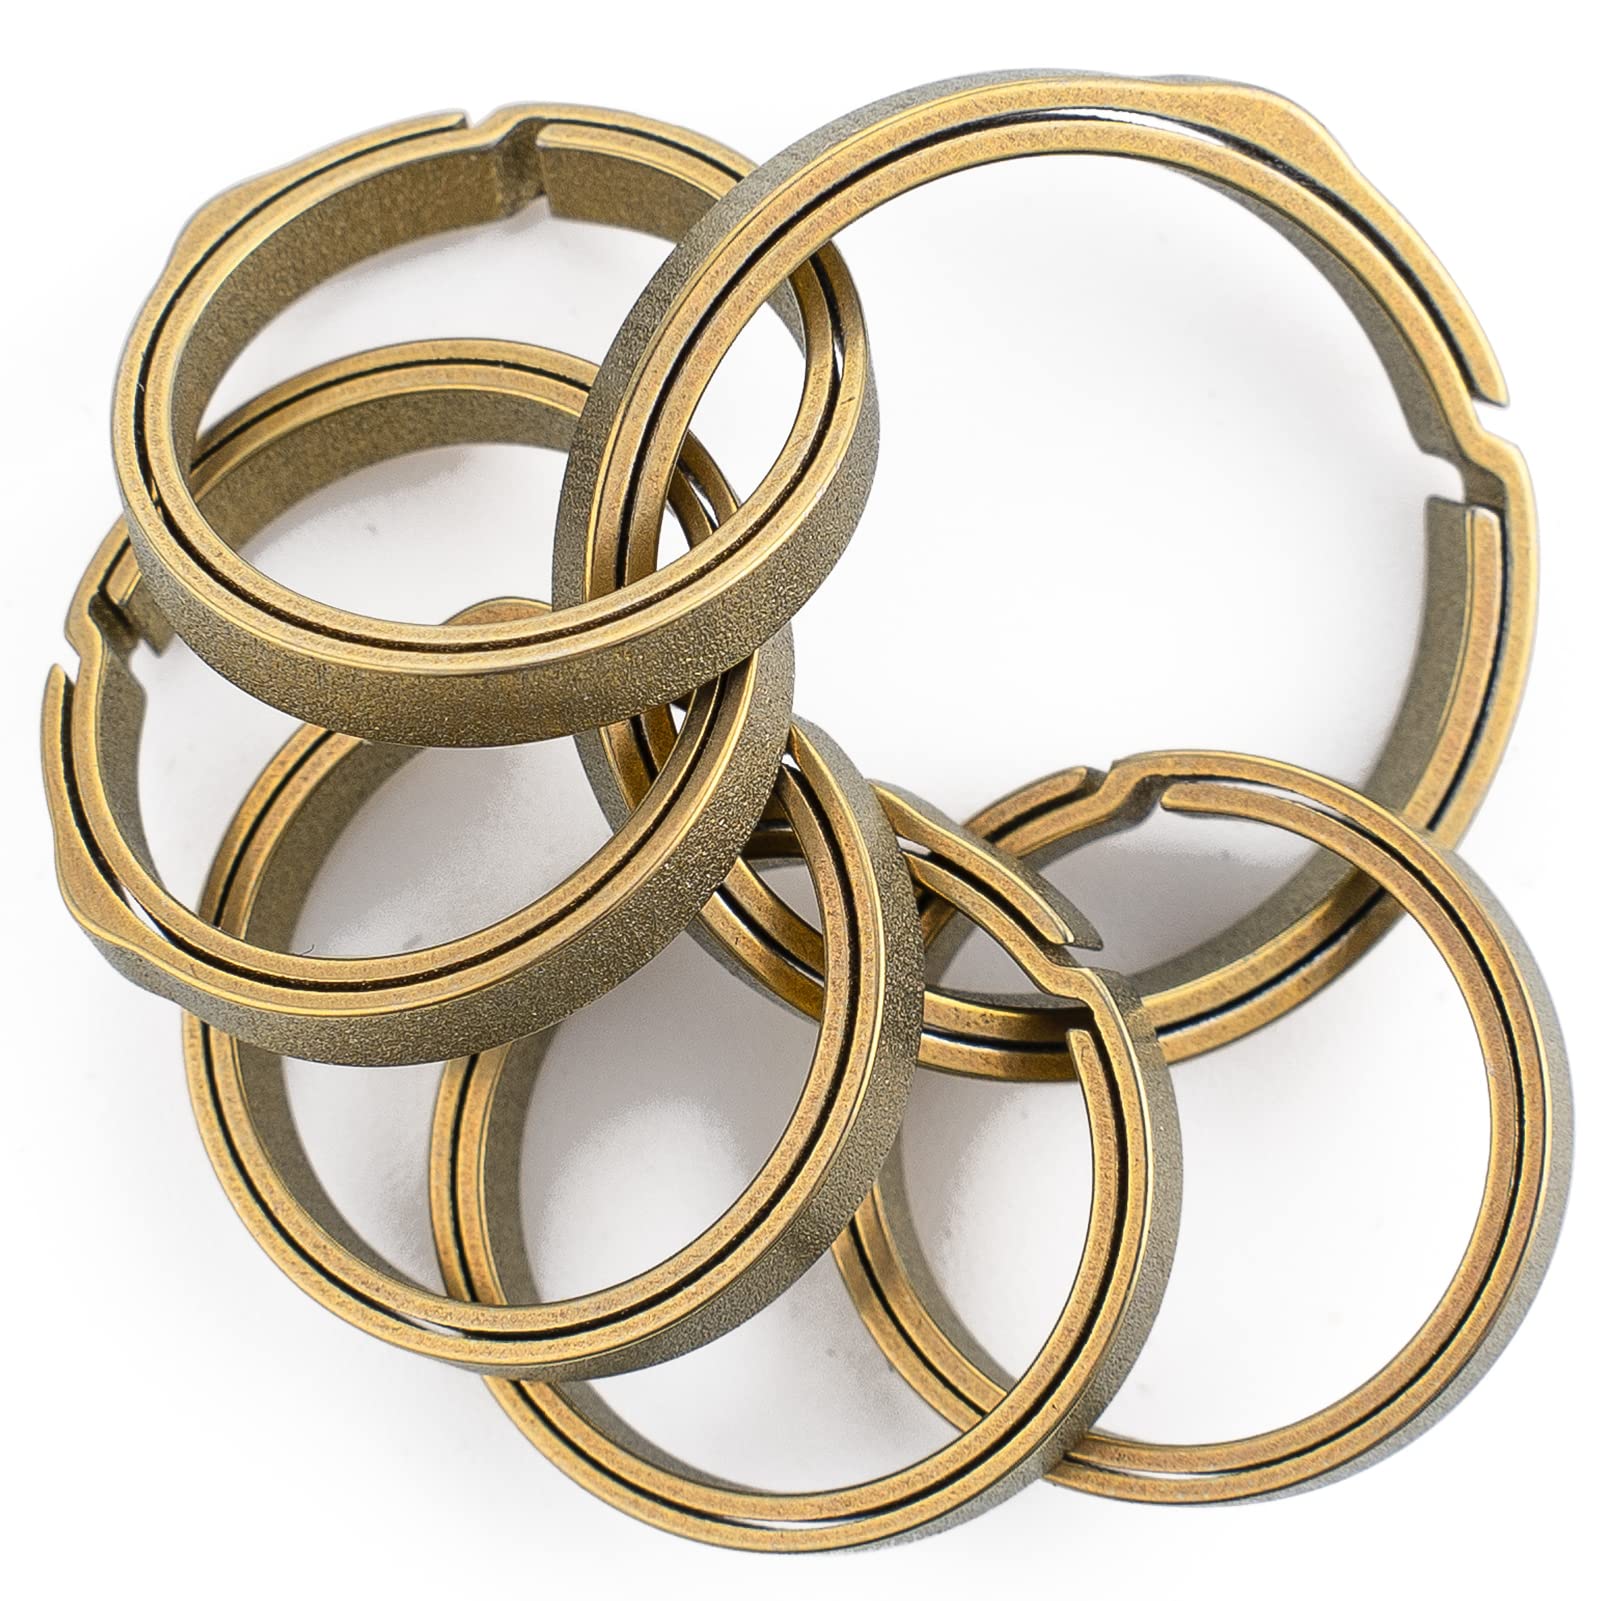 TISUR Gold Titanium key rings heavy duty, key chain rings keyring keychain  for men women, quick release key ring